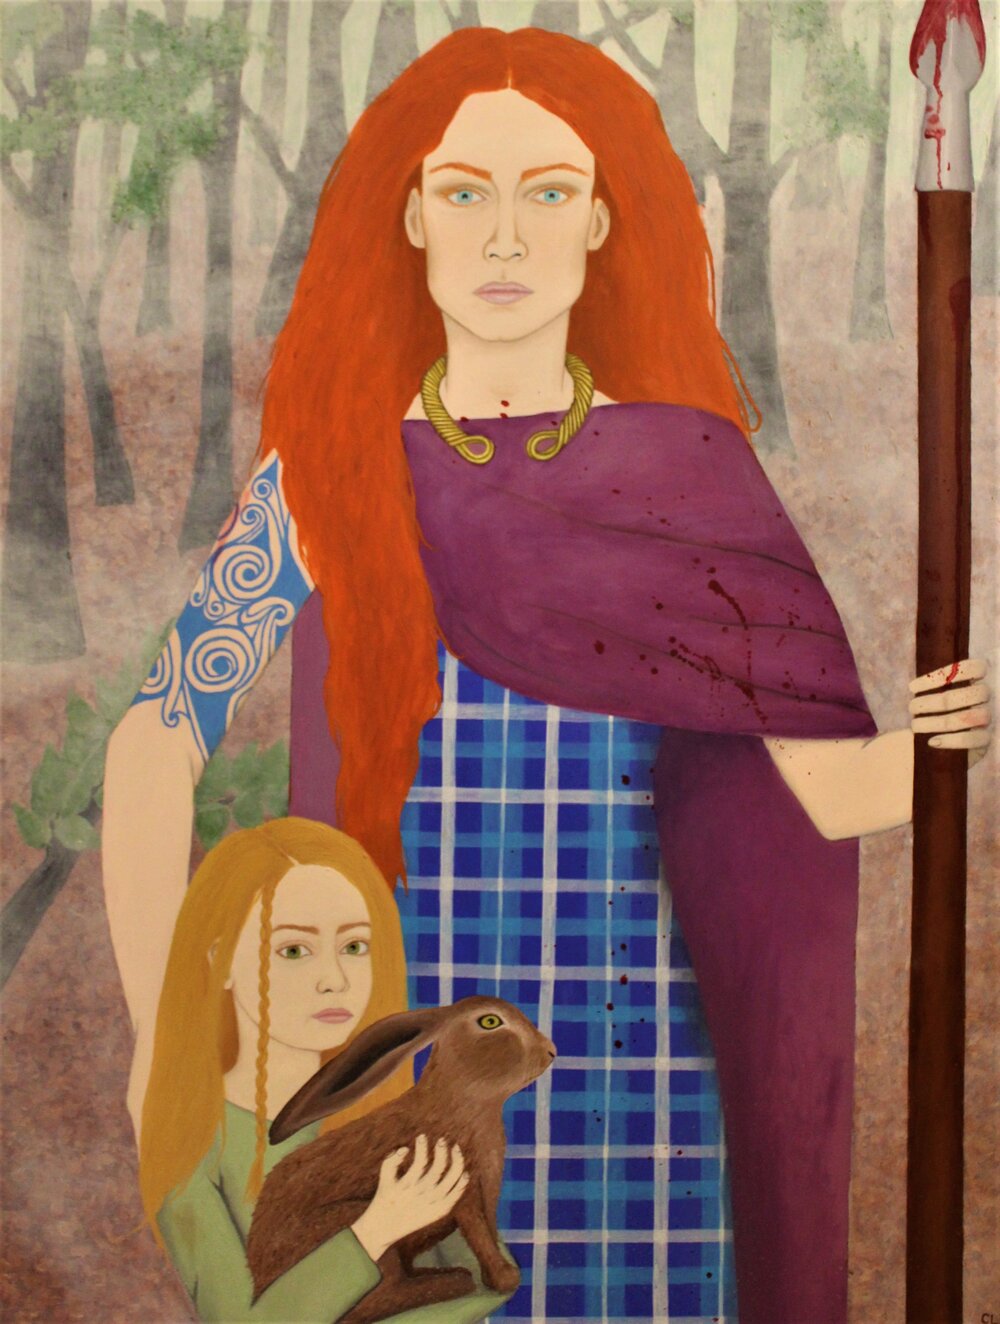 Celtic women knew how to wield power